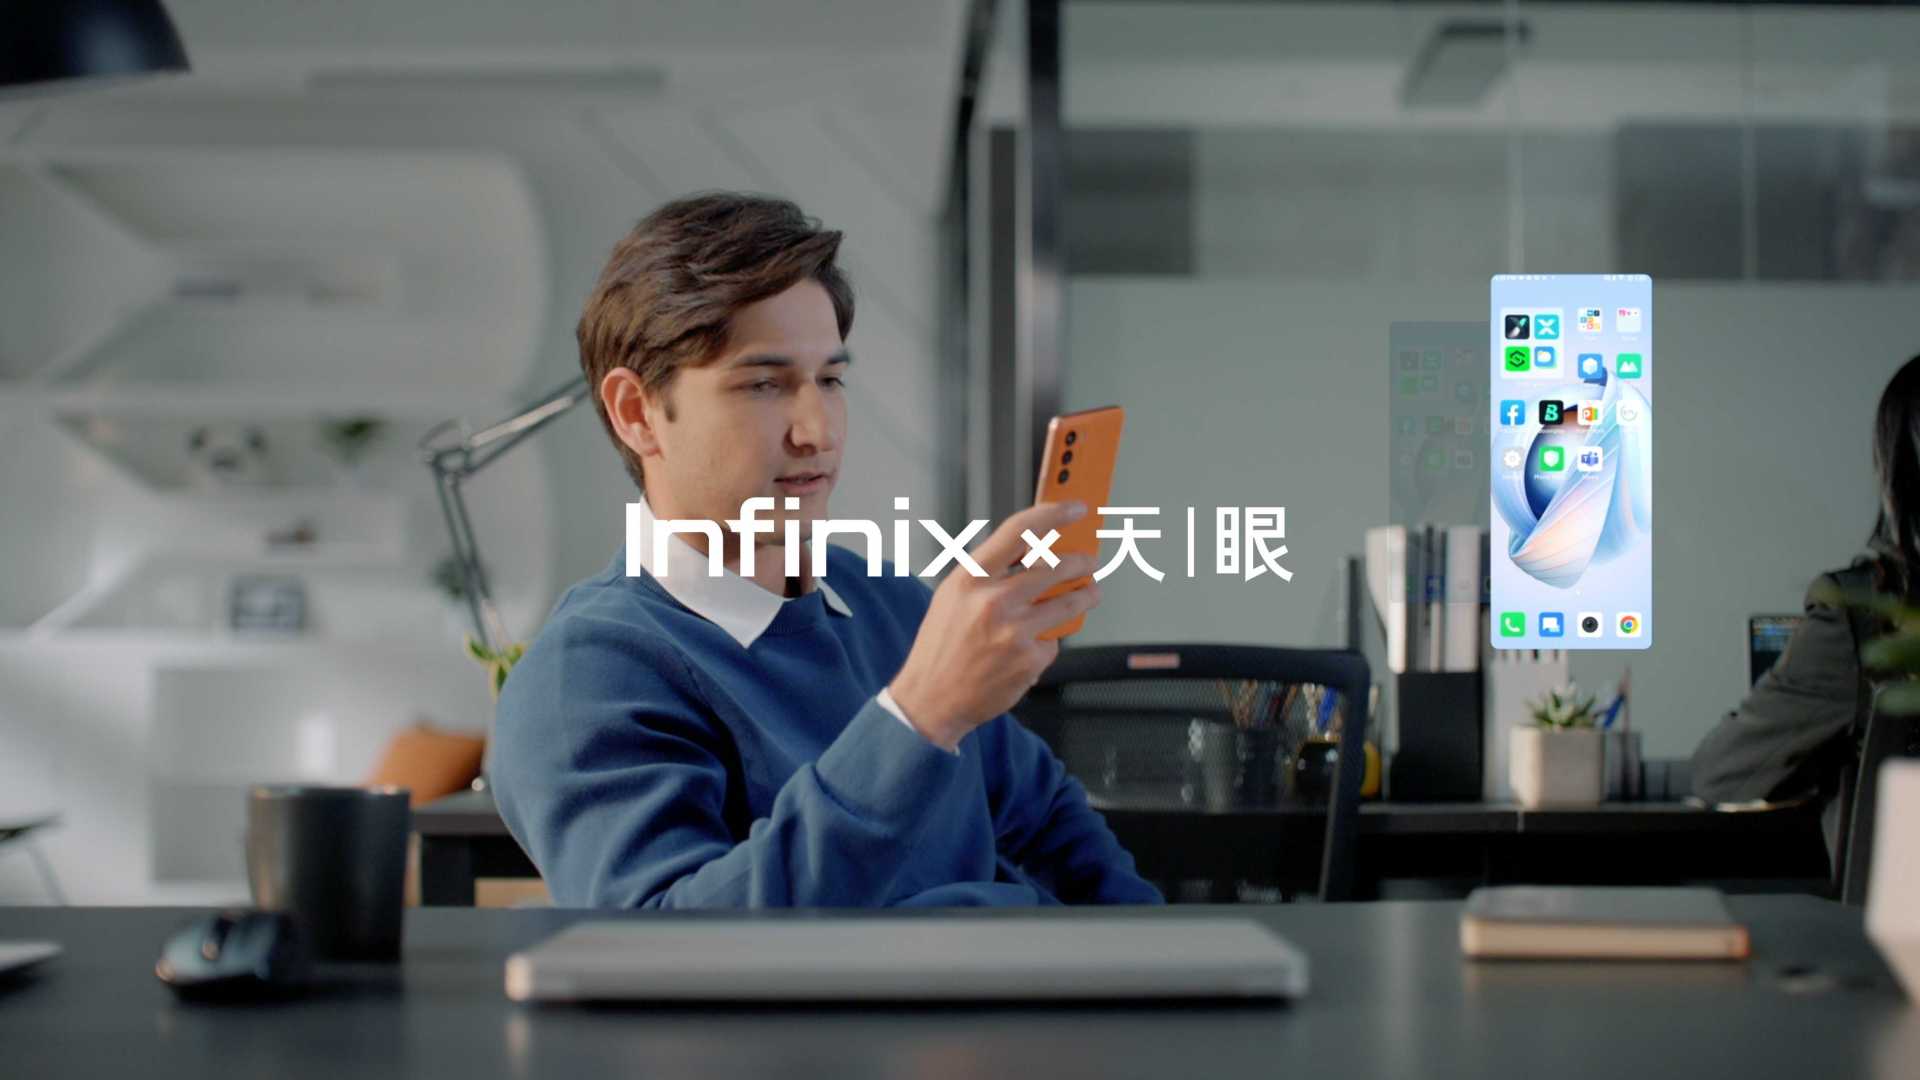 lnfinix-软件互联视频-办公篇